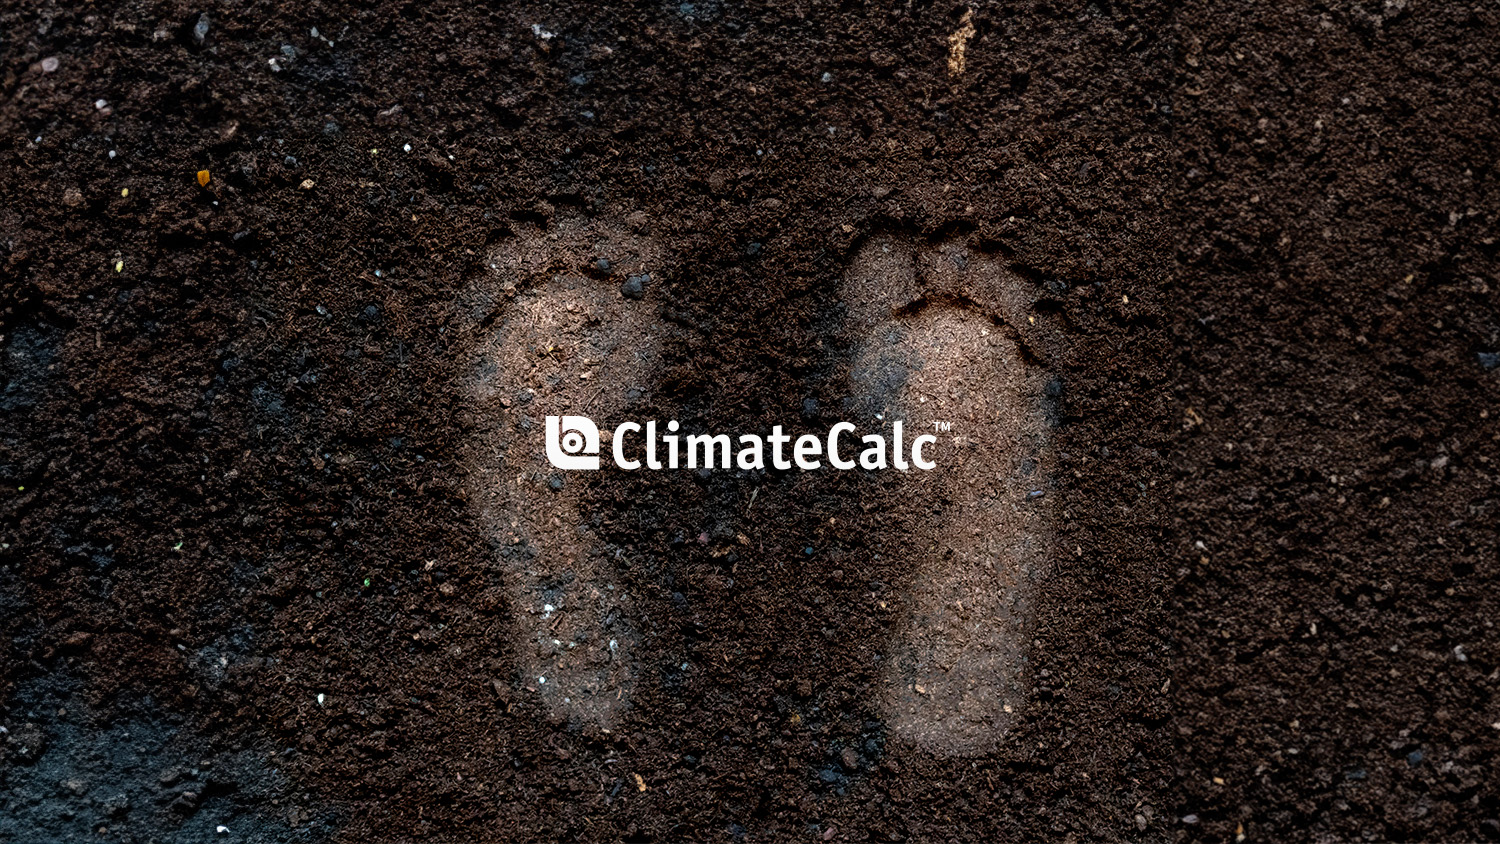 ClimateCalc